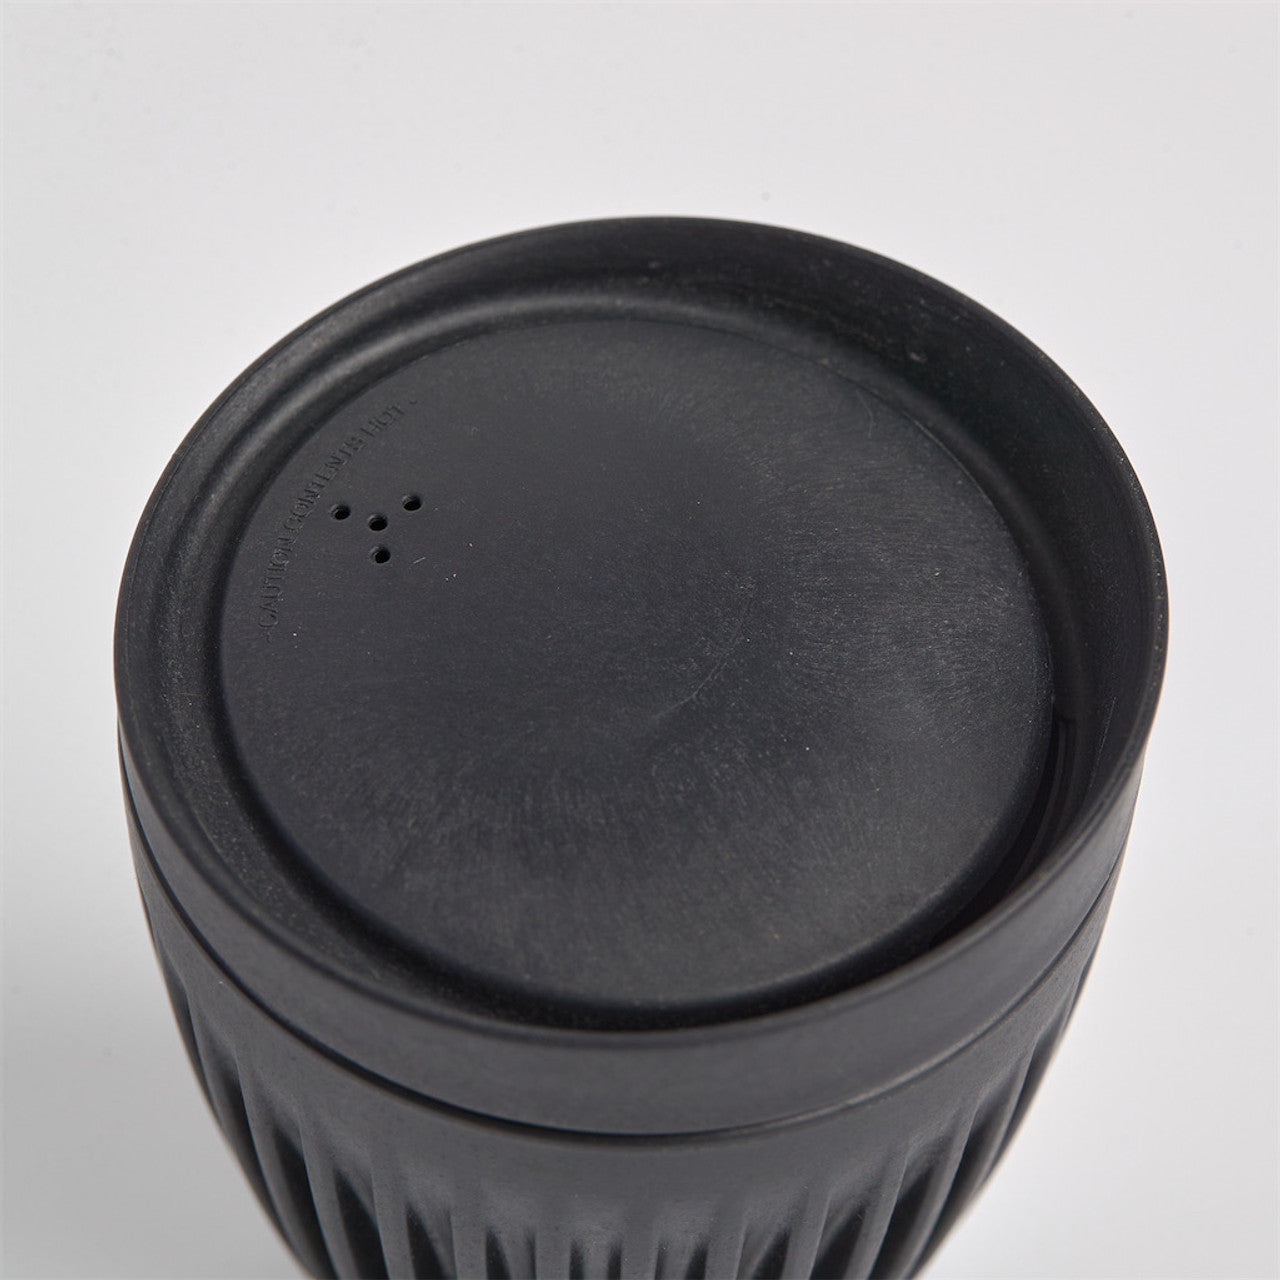 Huskee kopp med lock - 470 ml (16 oz) - Kolfärgad